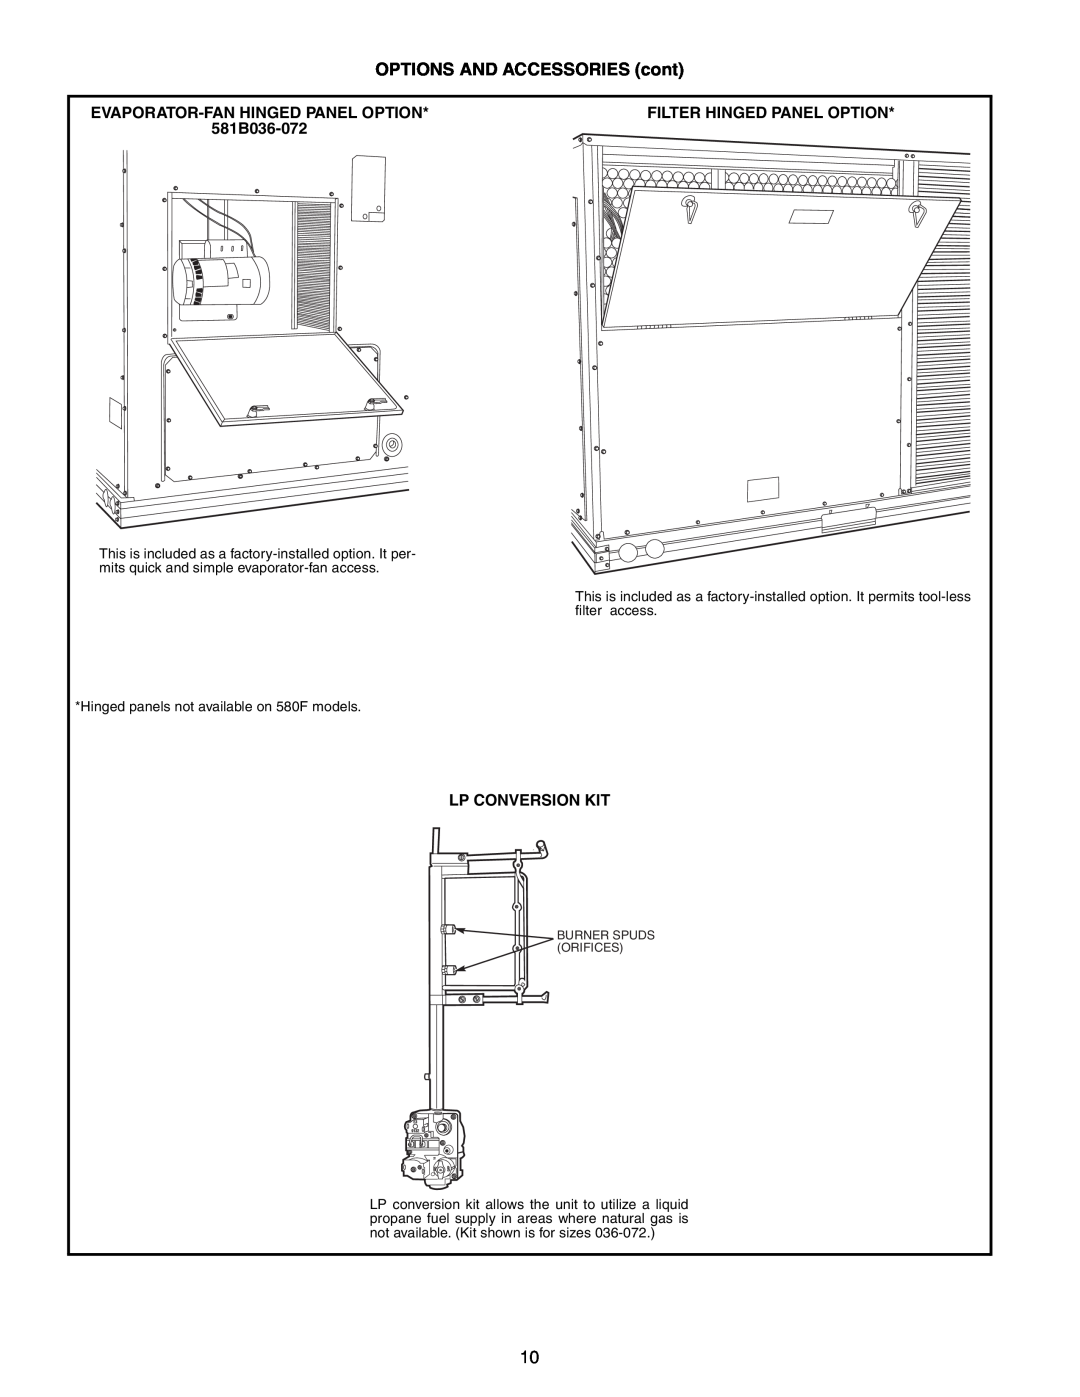 Bryant 551B, 558F, 551A manual Evaporator-Fan Hinged Panel Option, Filter Hinged Panel Option, Lp Conversion Kit, 581B036-072 